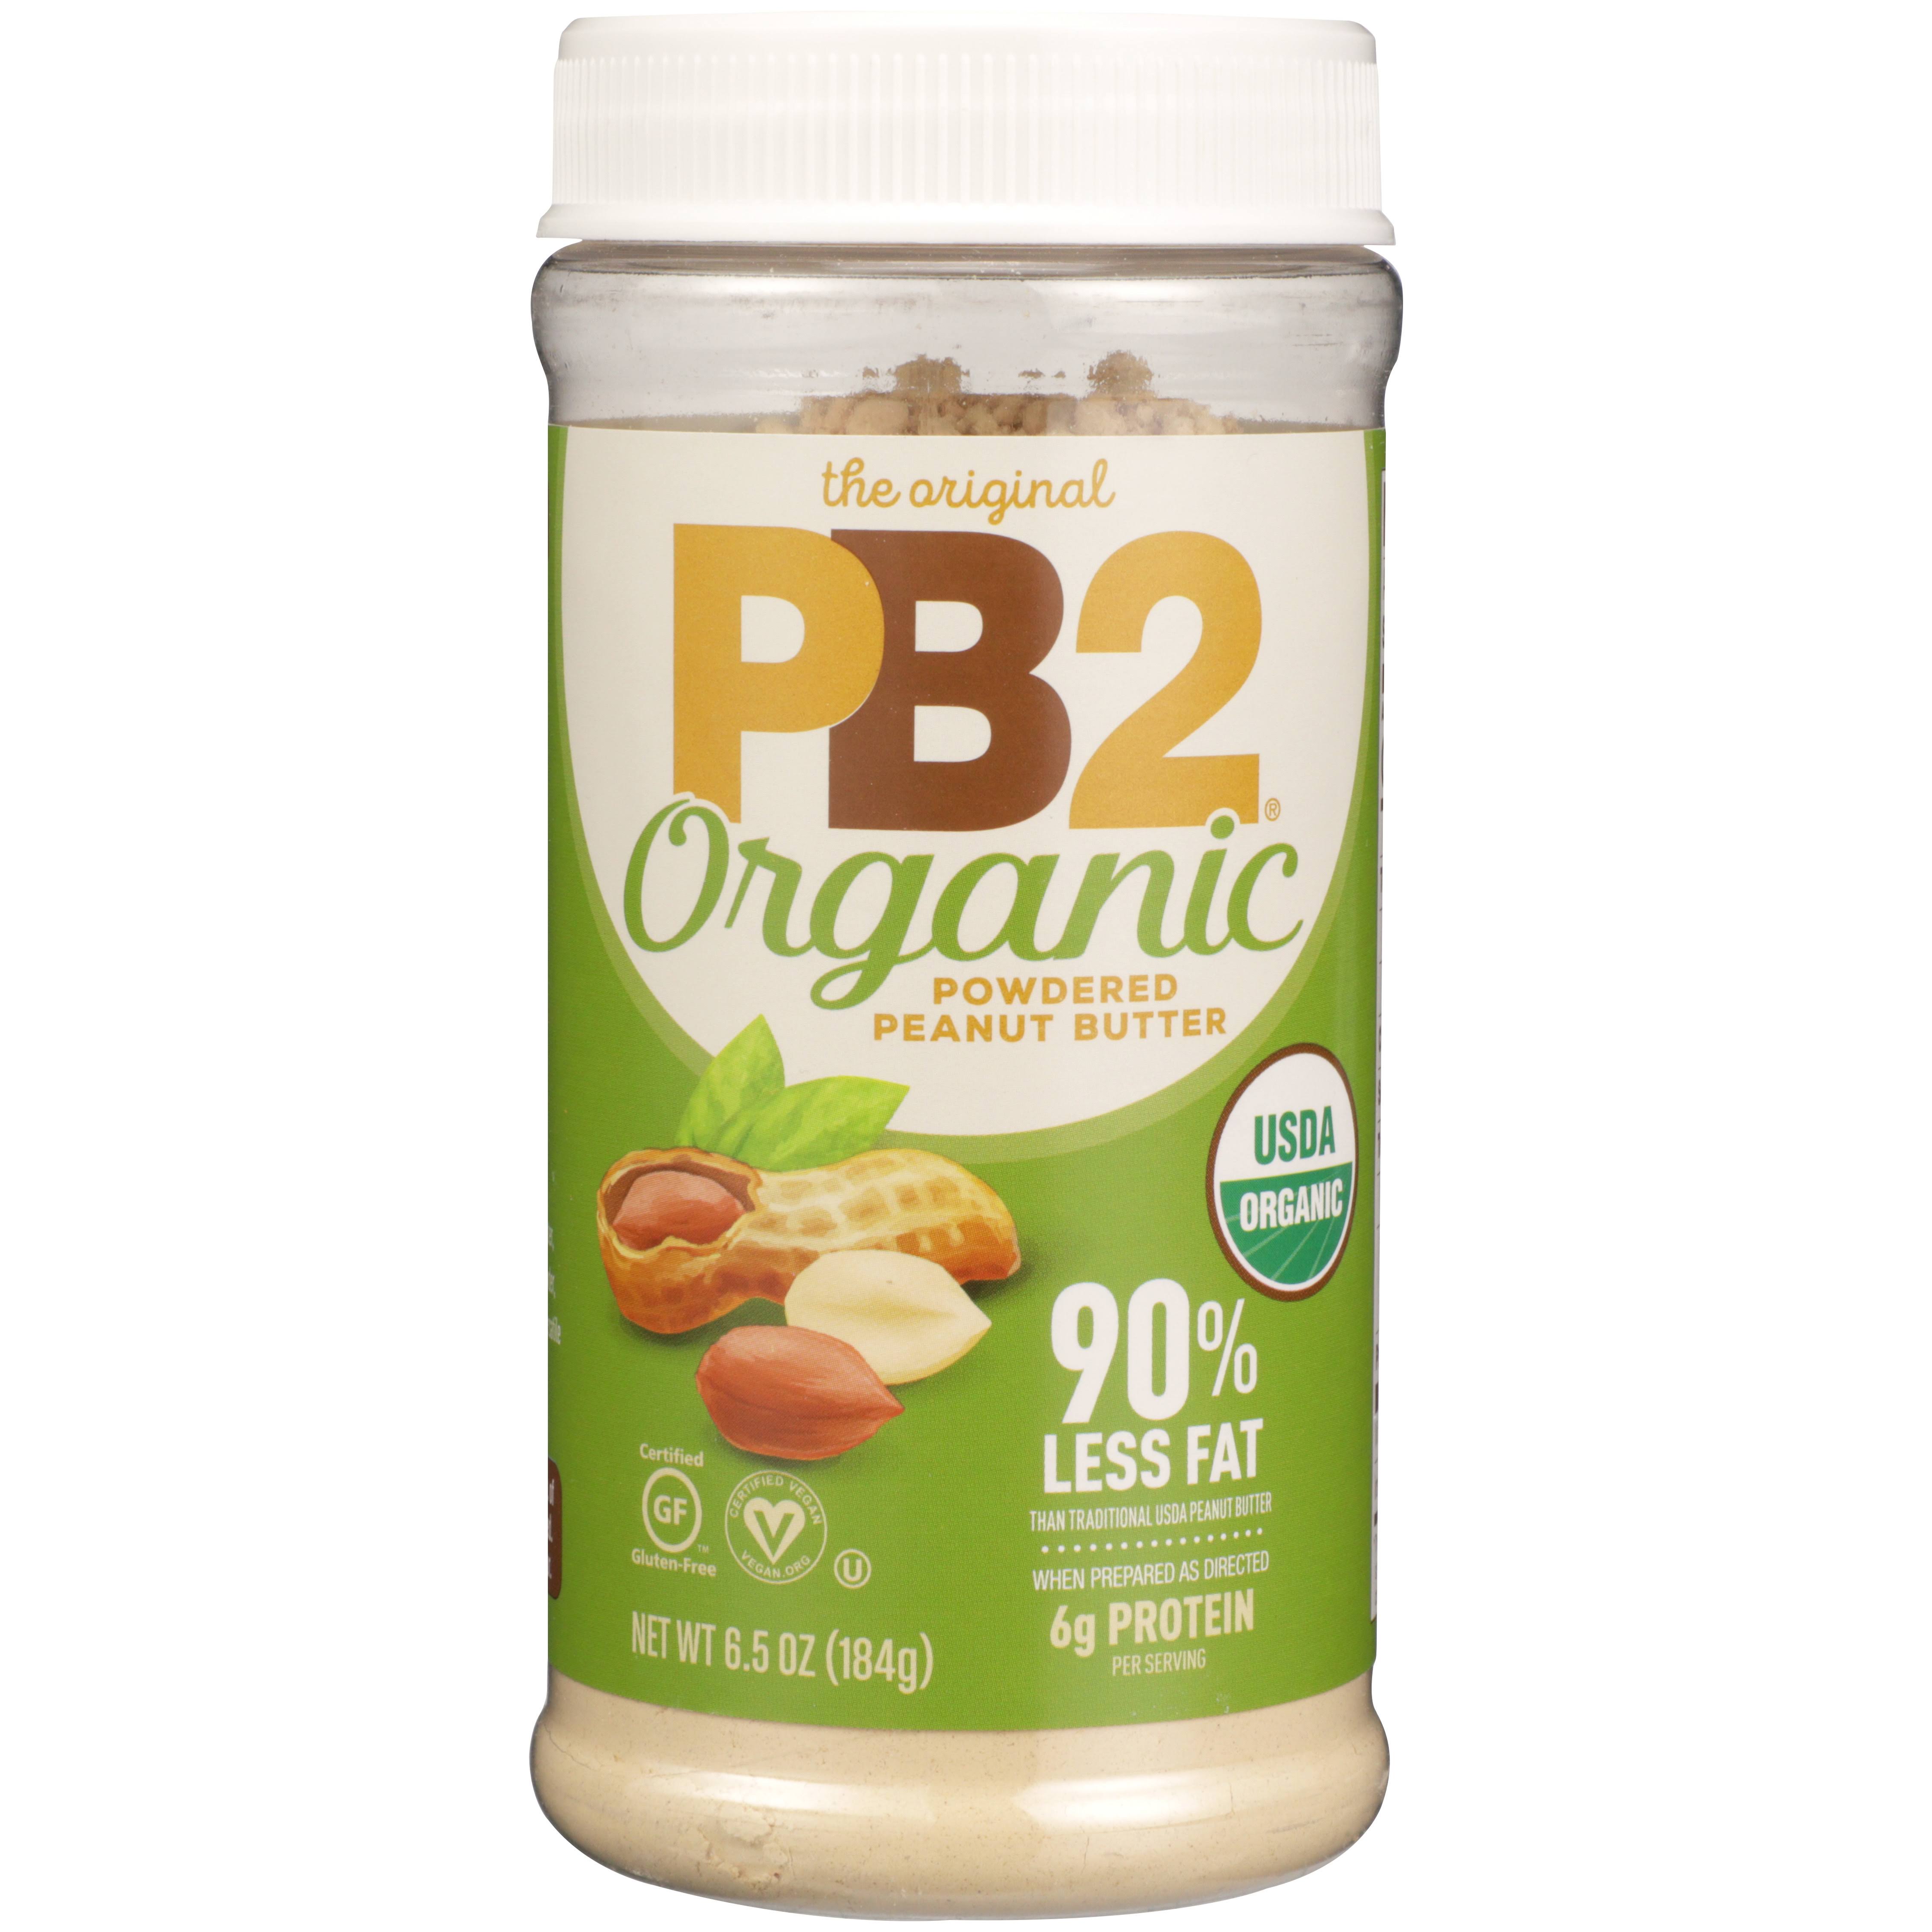 The Original PB2 Organic Powdered Peanut Butter - 6.5oz